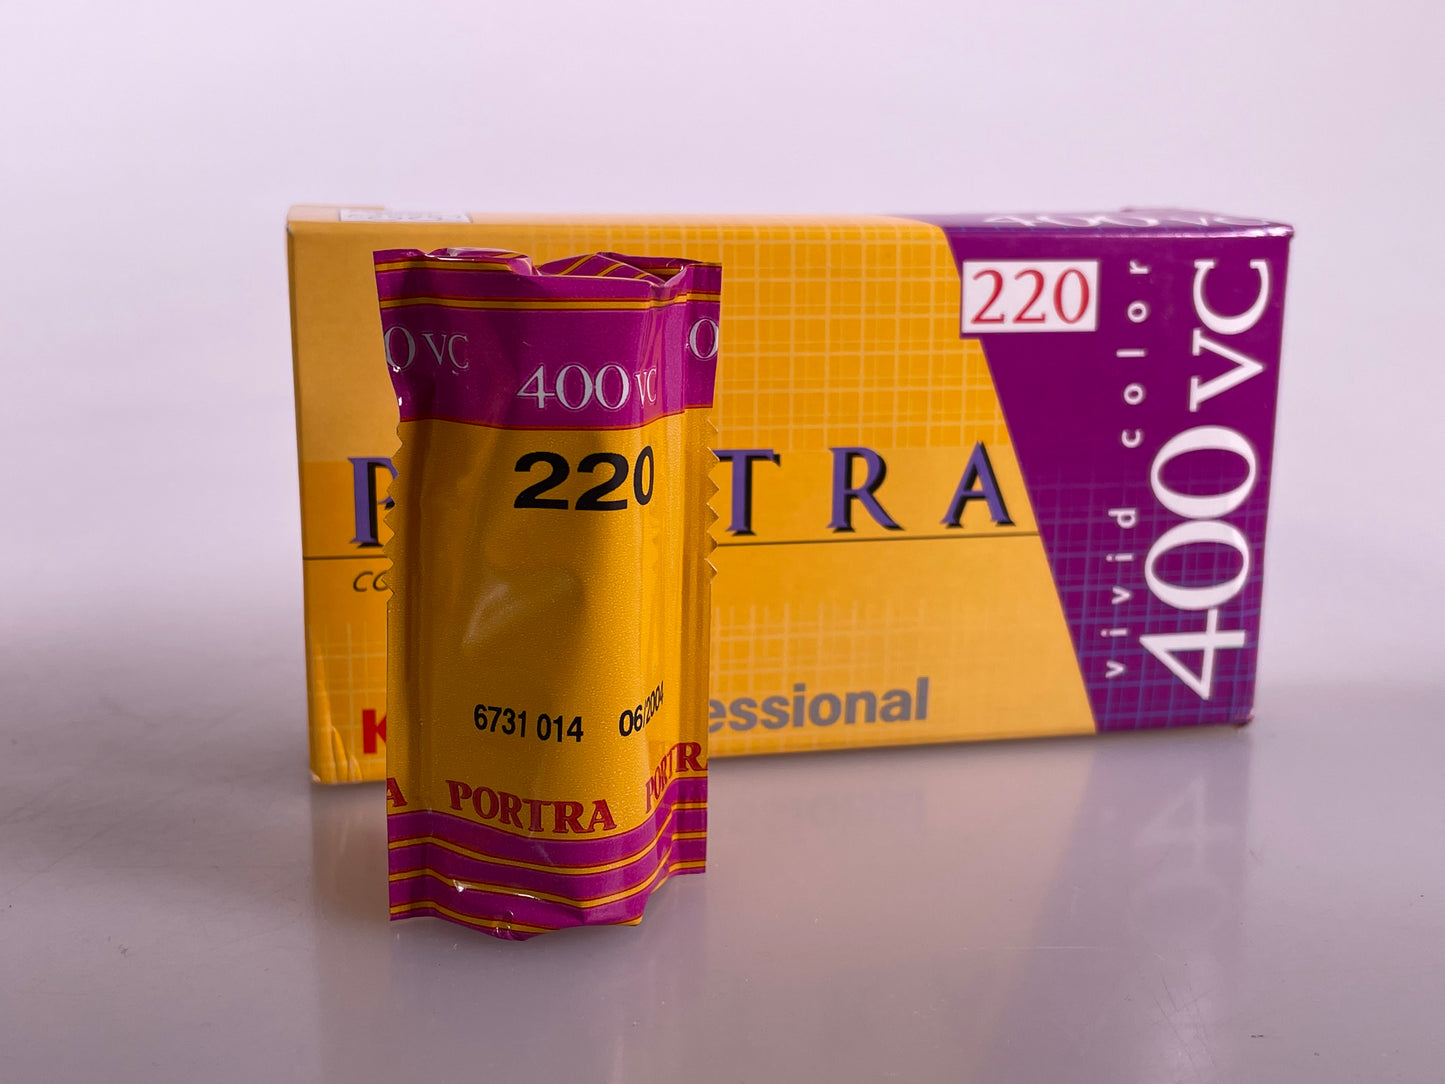 1 Roll Kodak color Portra 400 VC Vivid Color 220 expiration 2004